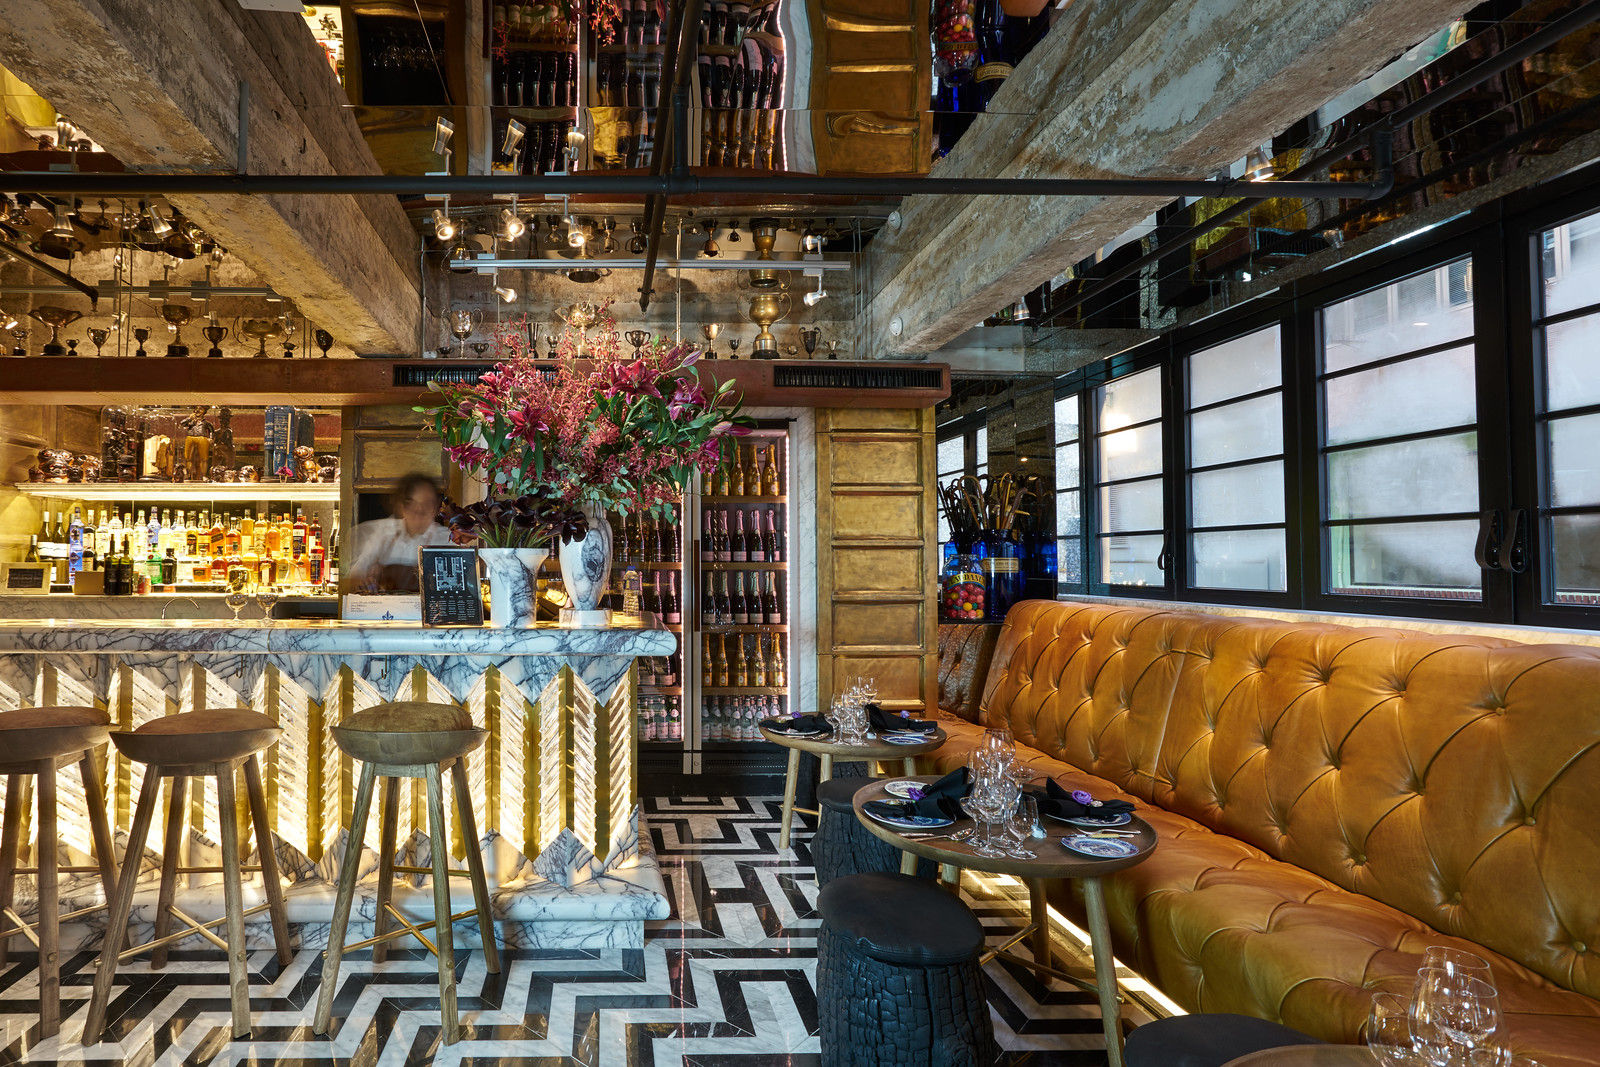 Step inside Hong Kong’s most stylish restaurant interiors